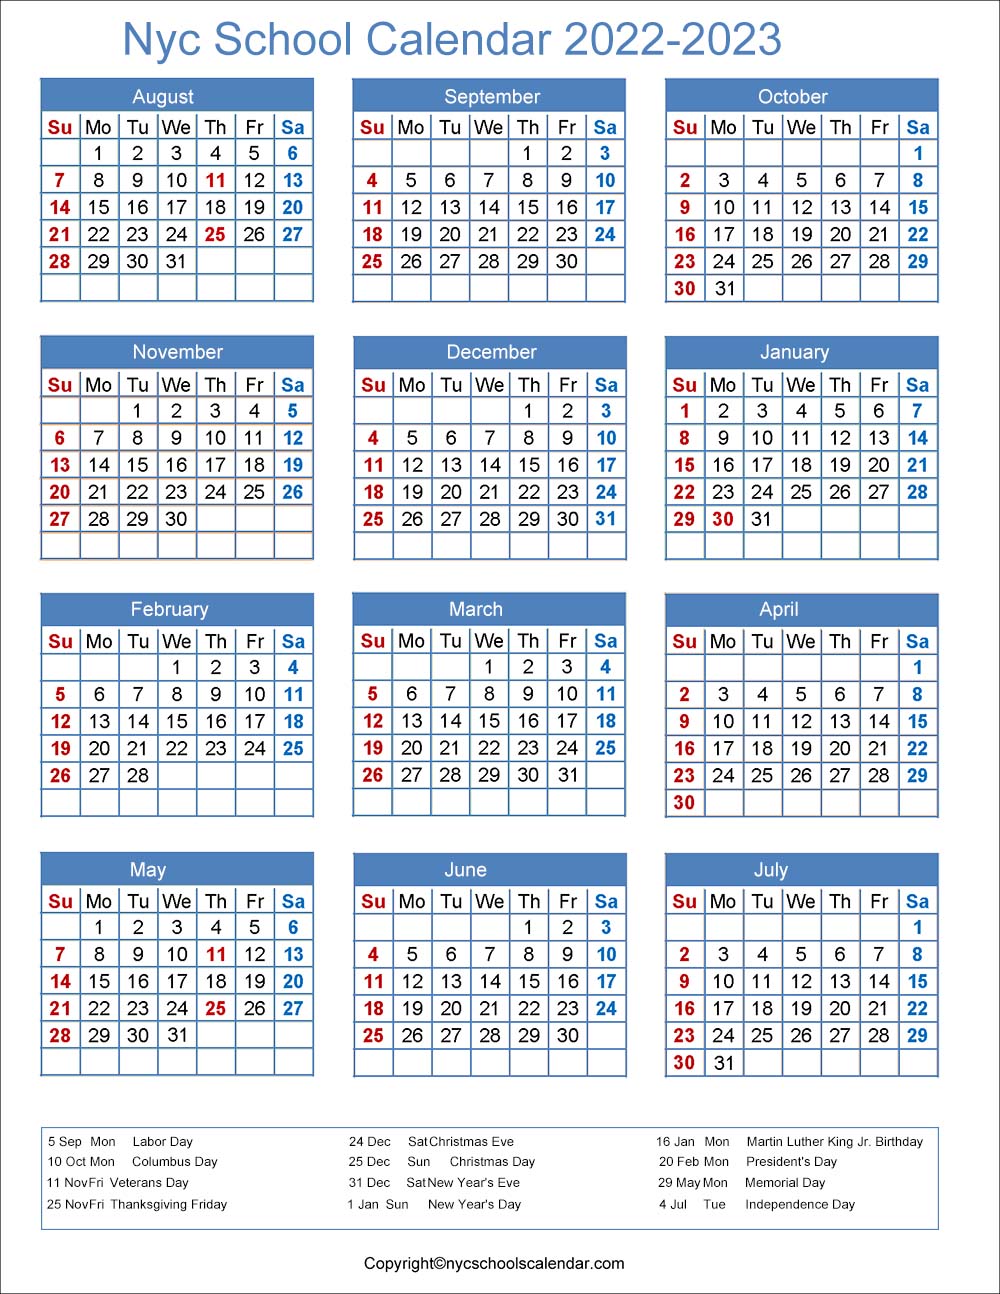 Nyc School Holidays Calendar 2022 2023